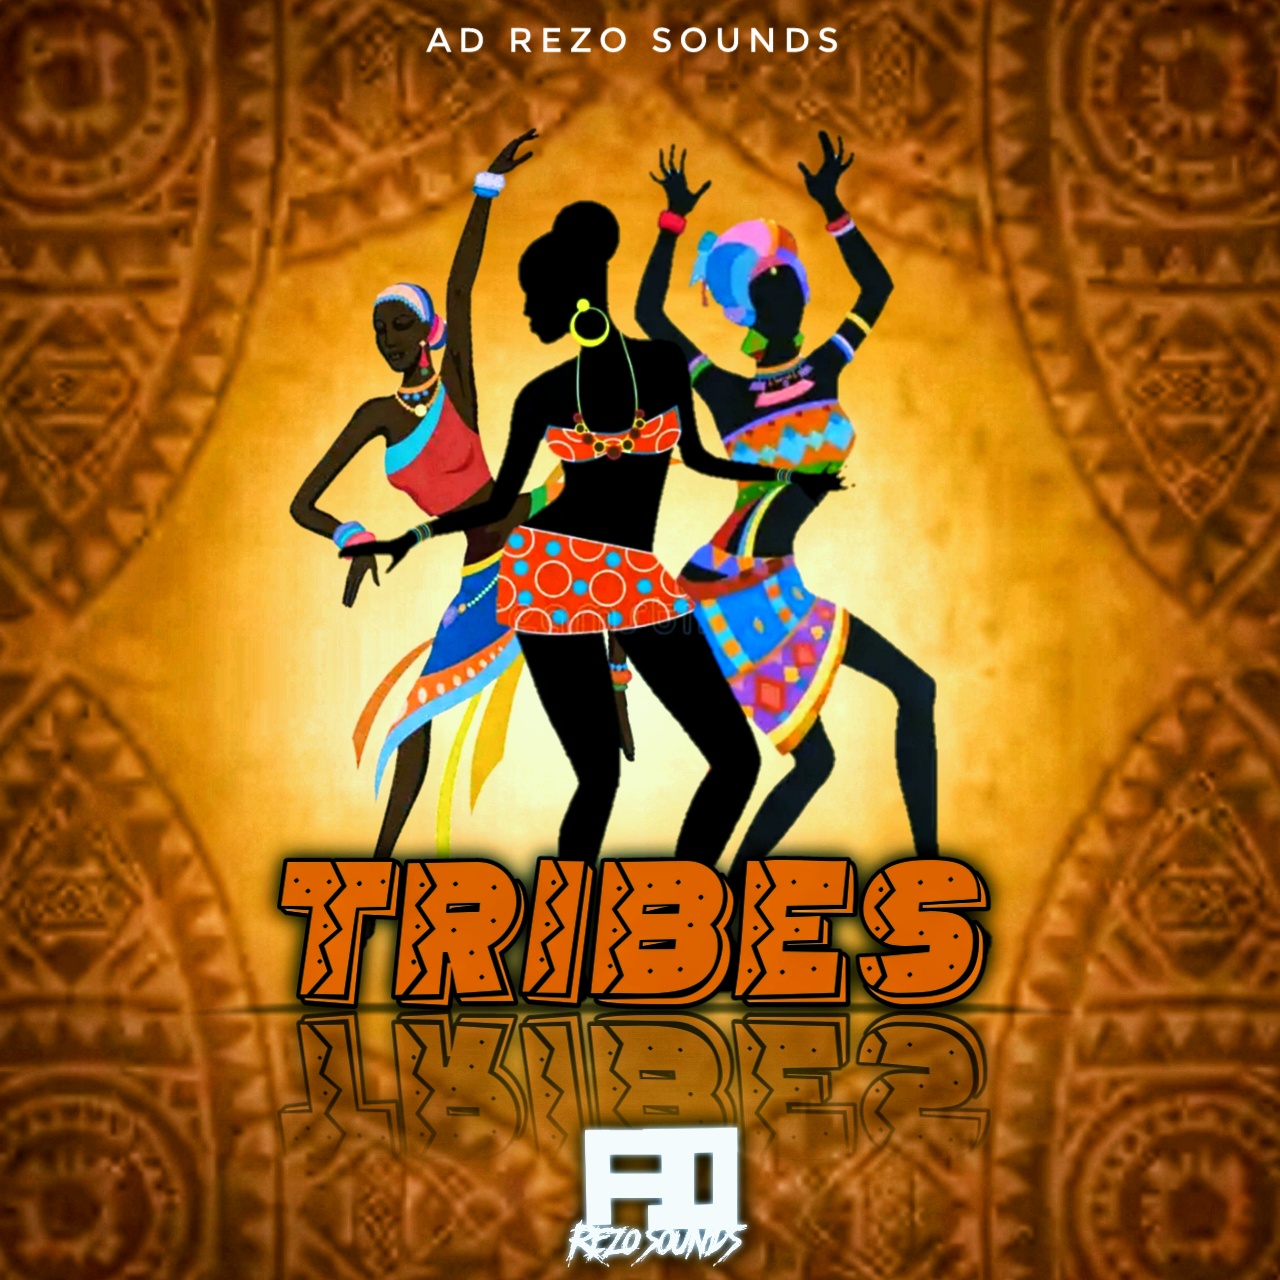 Tribes beat - AD rezo sounds